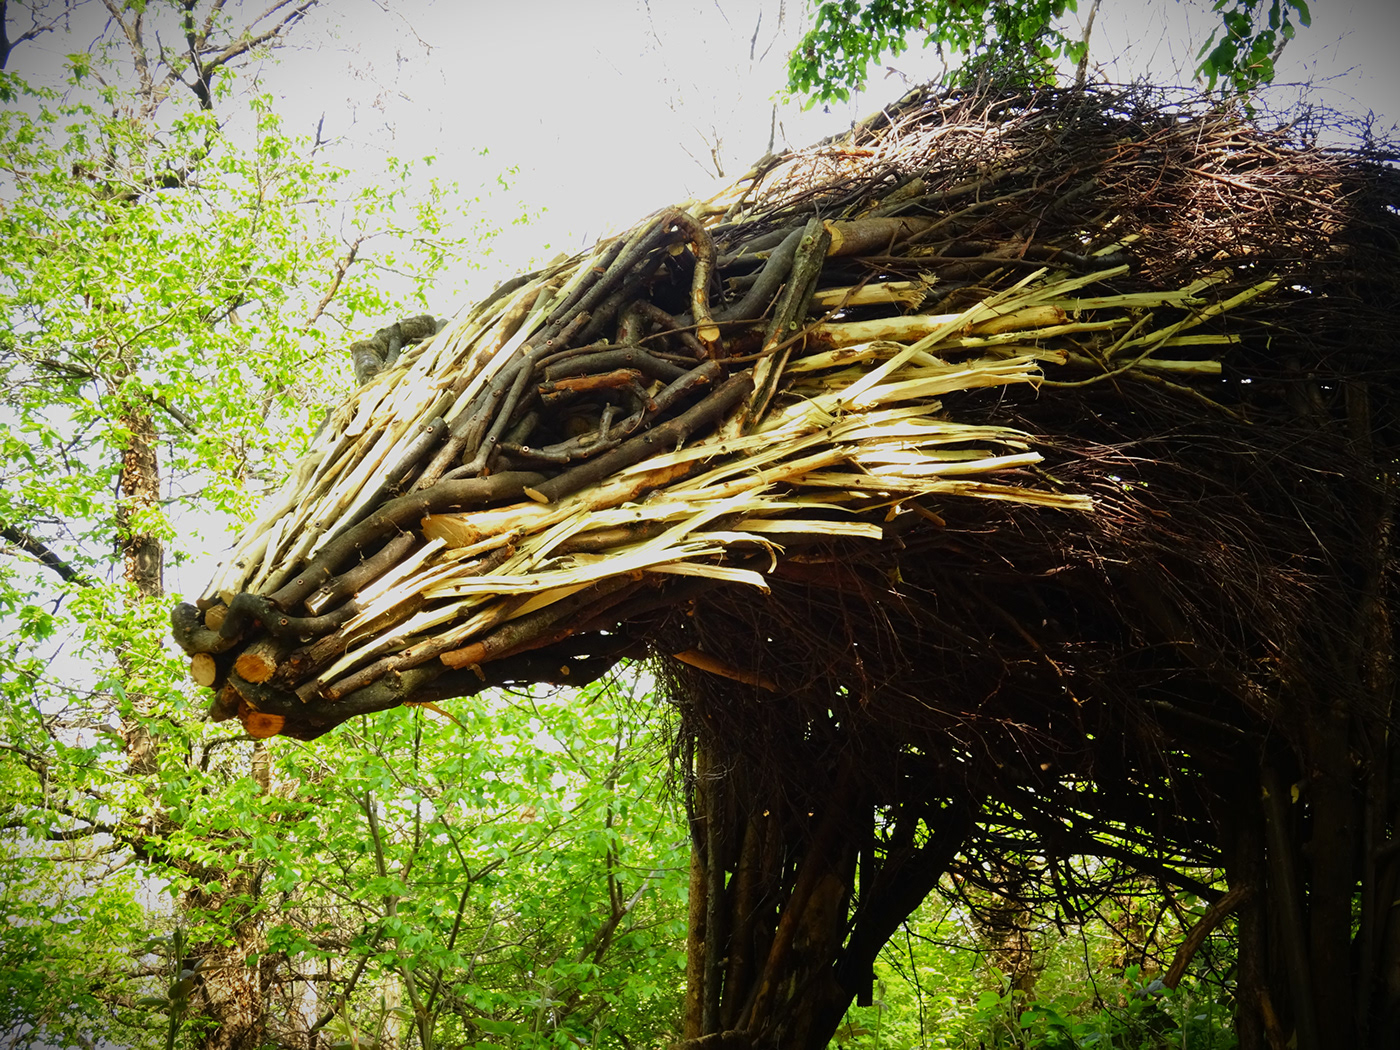 landart Nature sculpture animal wood ephemeral installation biodiversity Italy Landscape